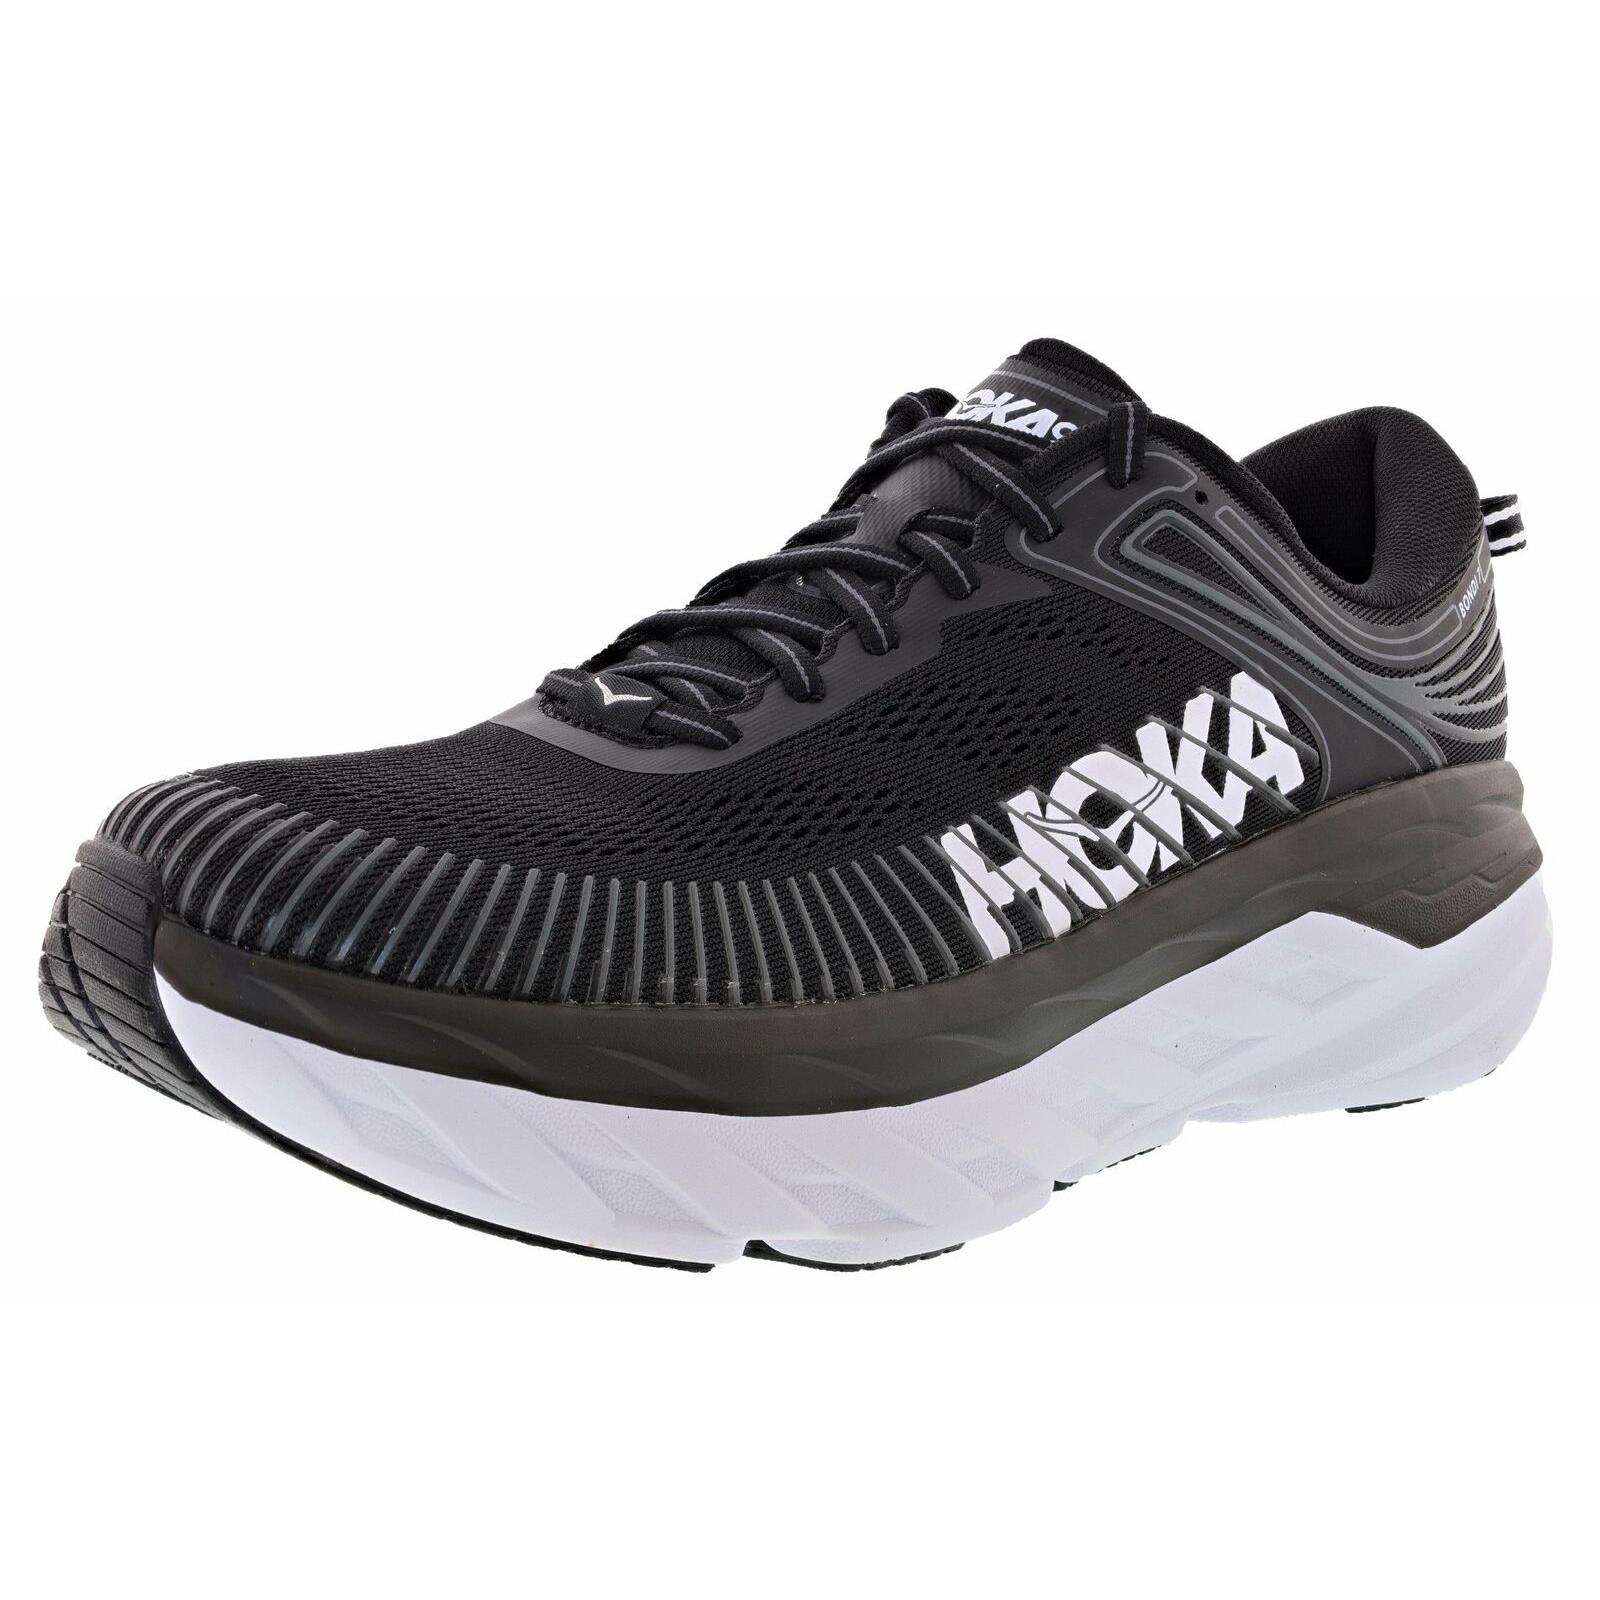 Hoka One One Bondi 7 Men`s Road Running Shoes Lightweight Cushioned Support Black/White